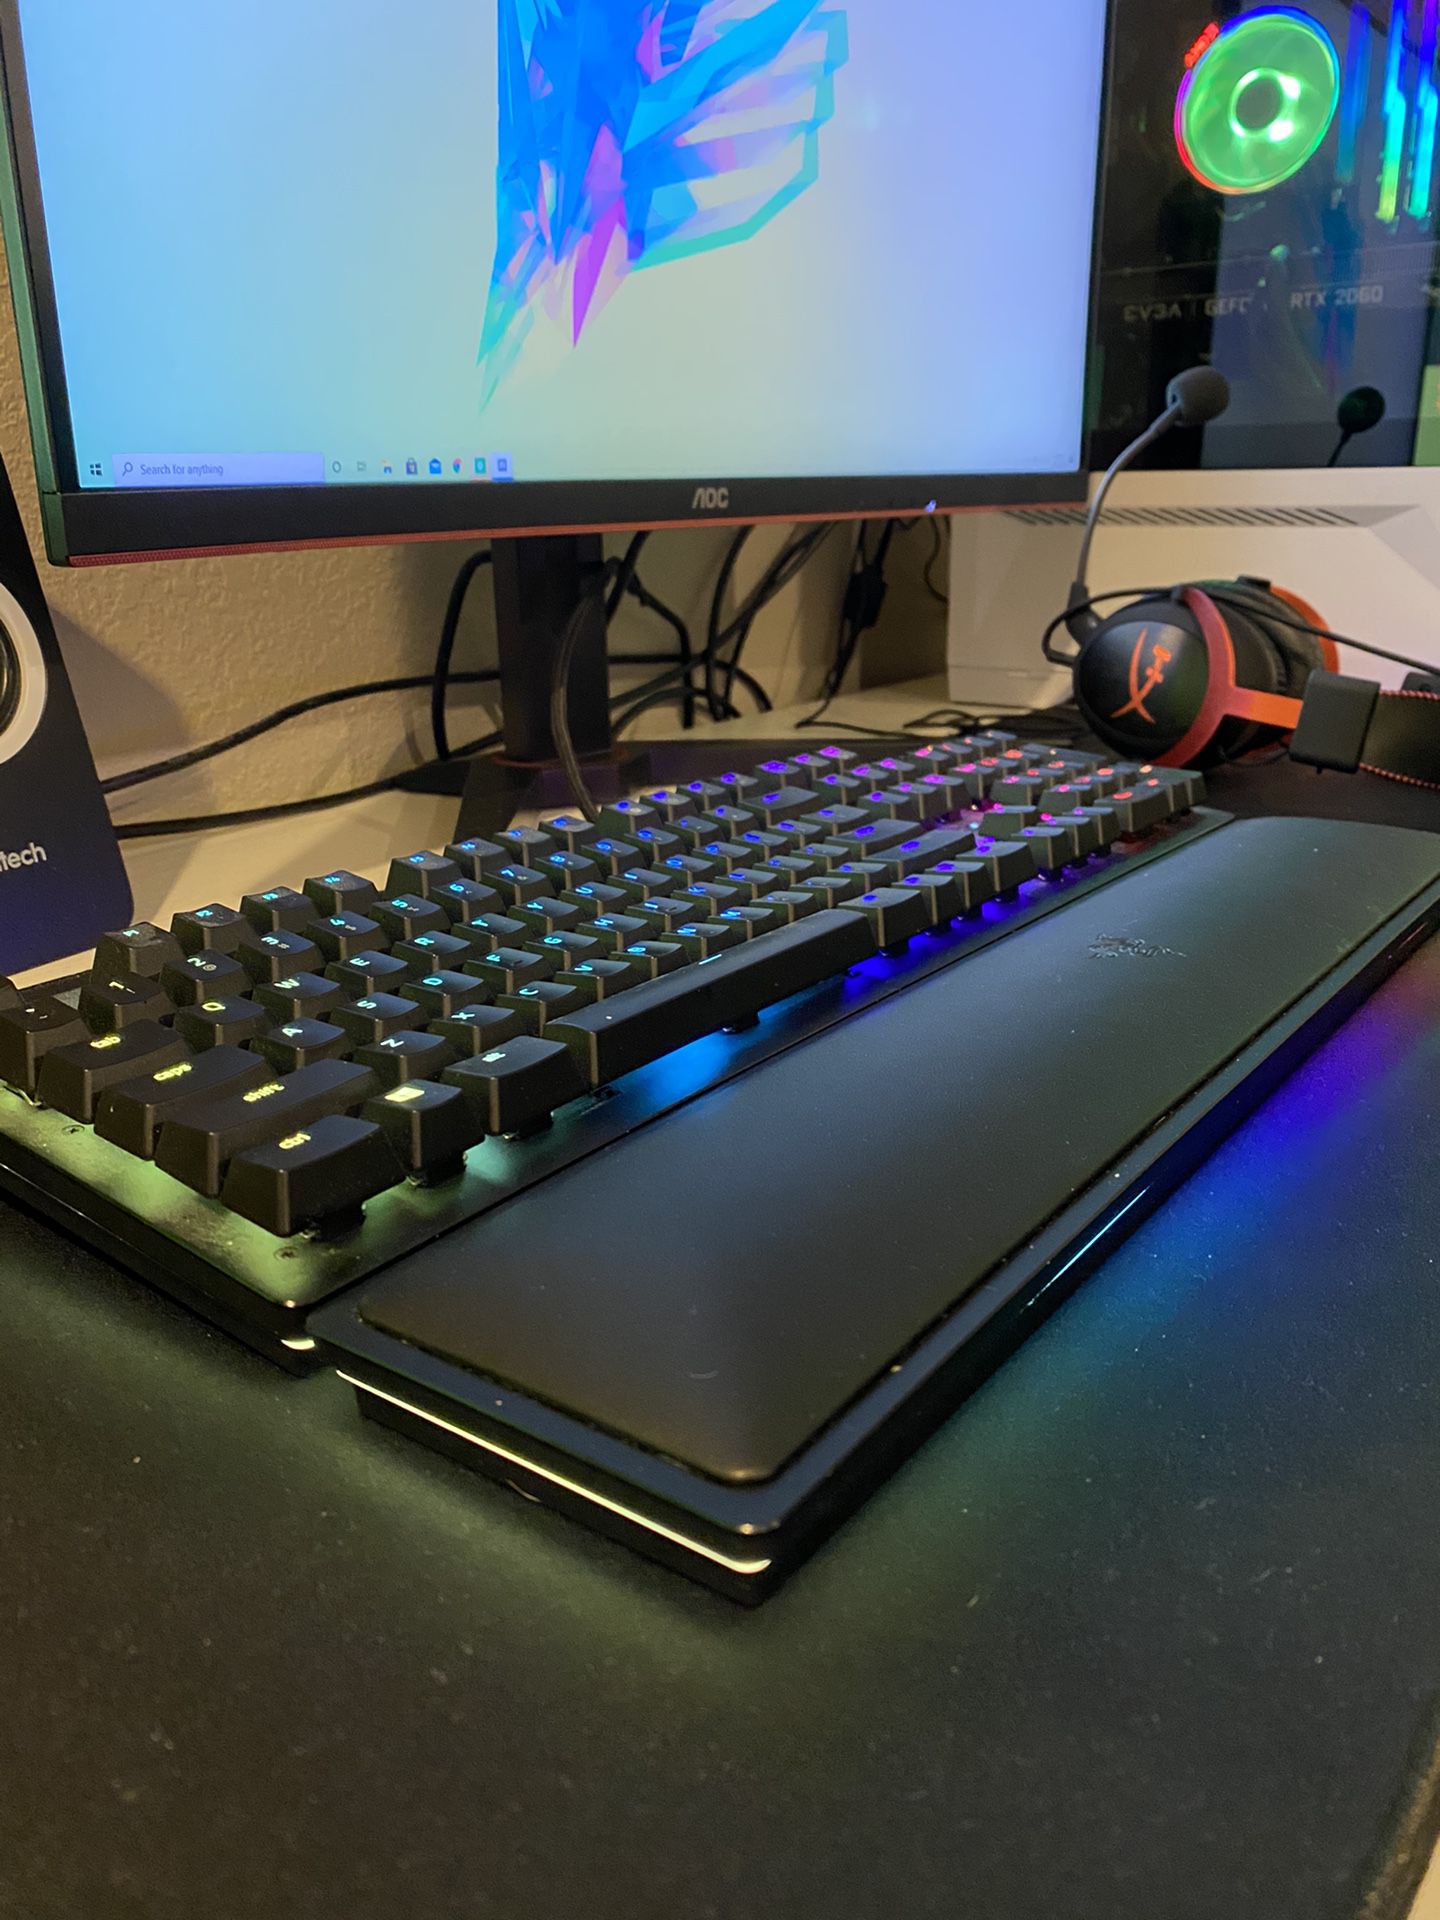 Razer Huntsman Elite Keyboard